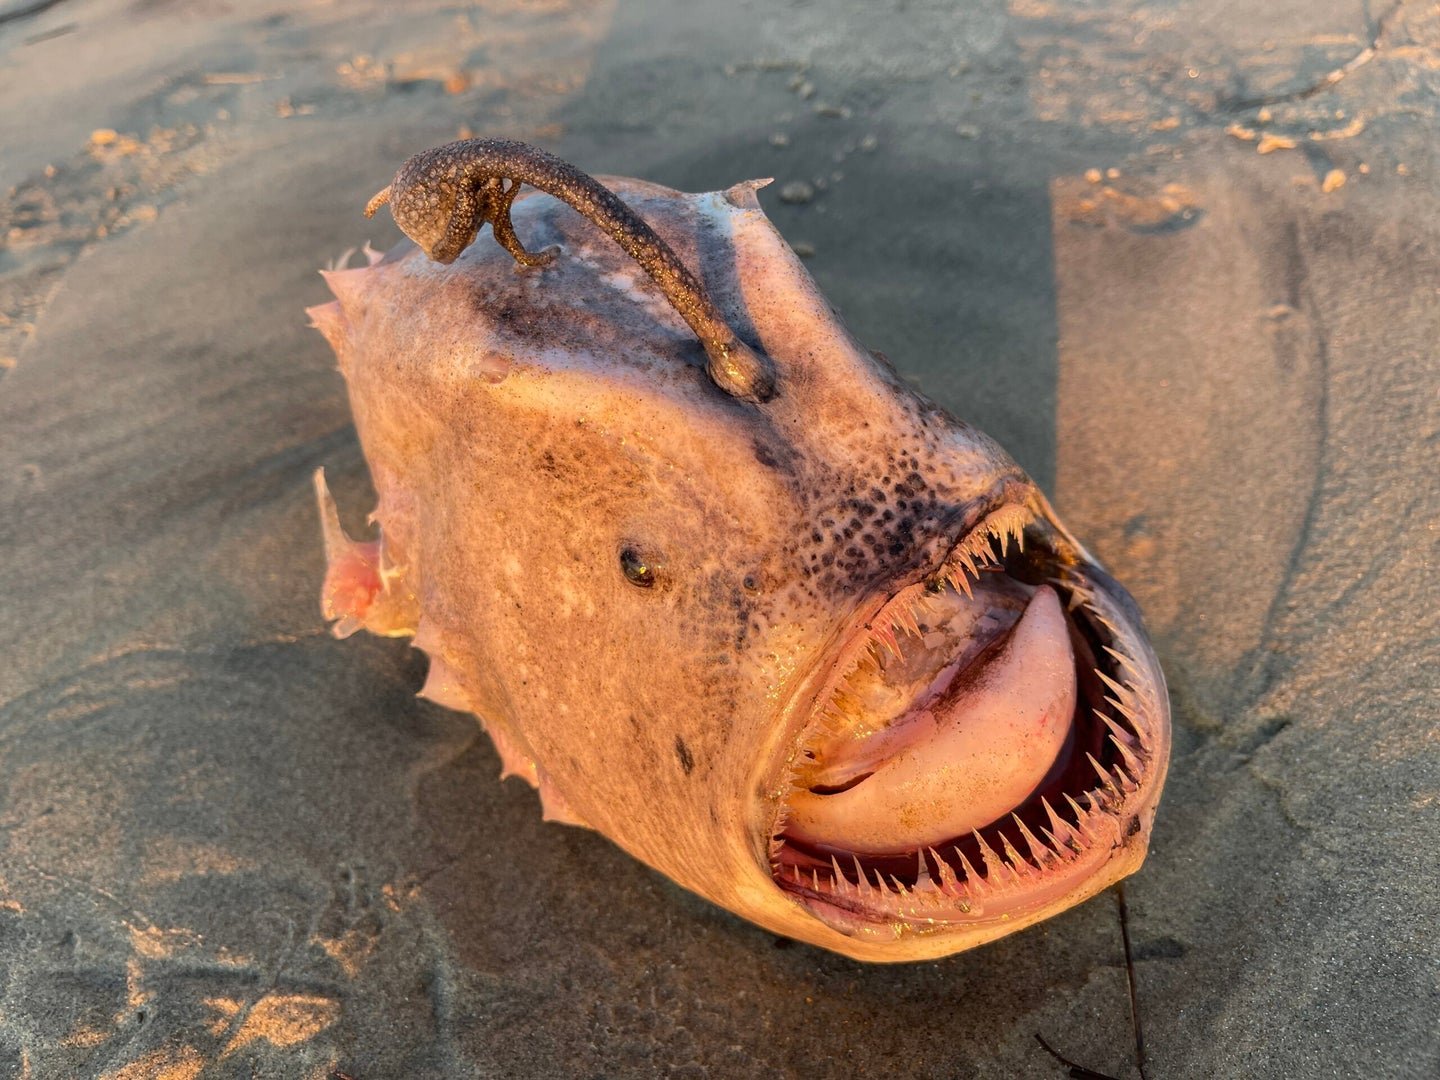 “The Stuff of Nightmares.” Extremely Rare Footballfish Found on San Diego Beach